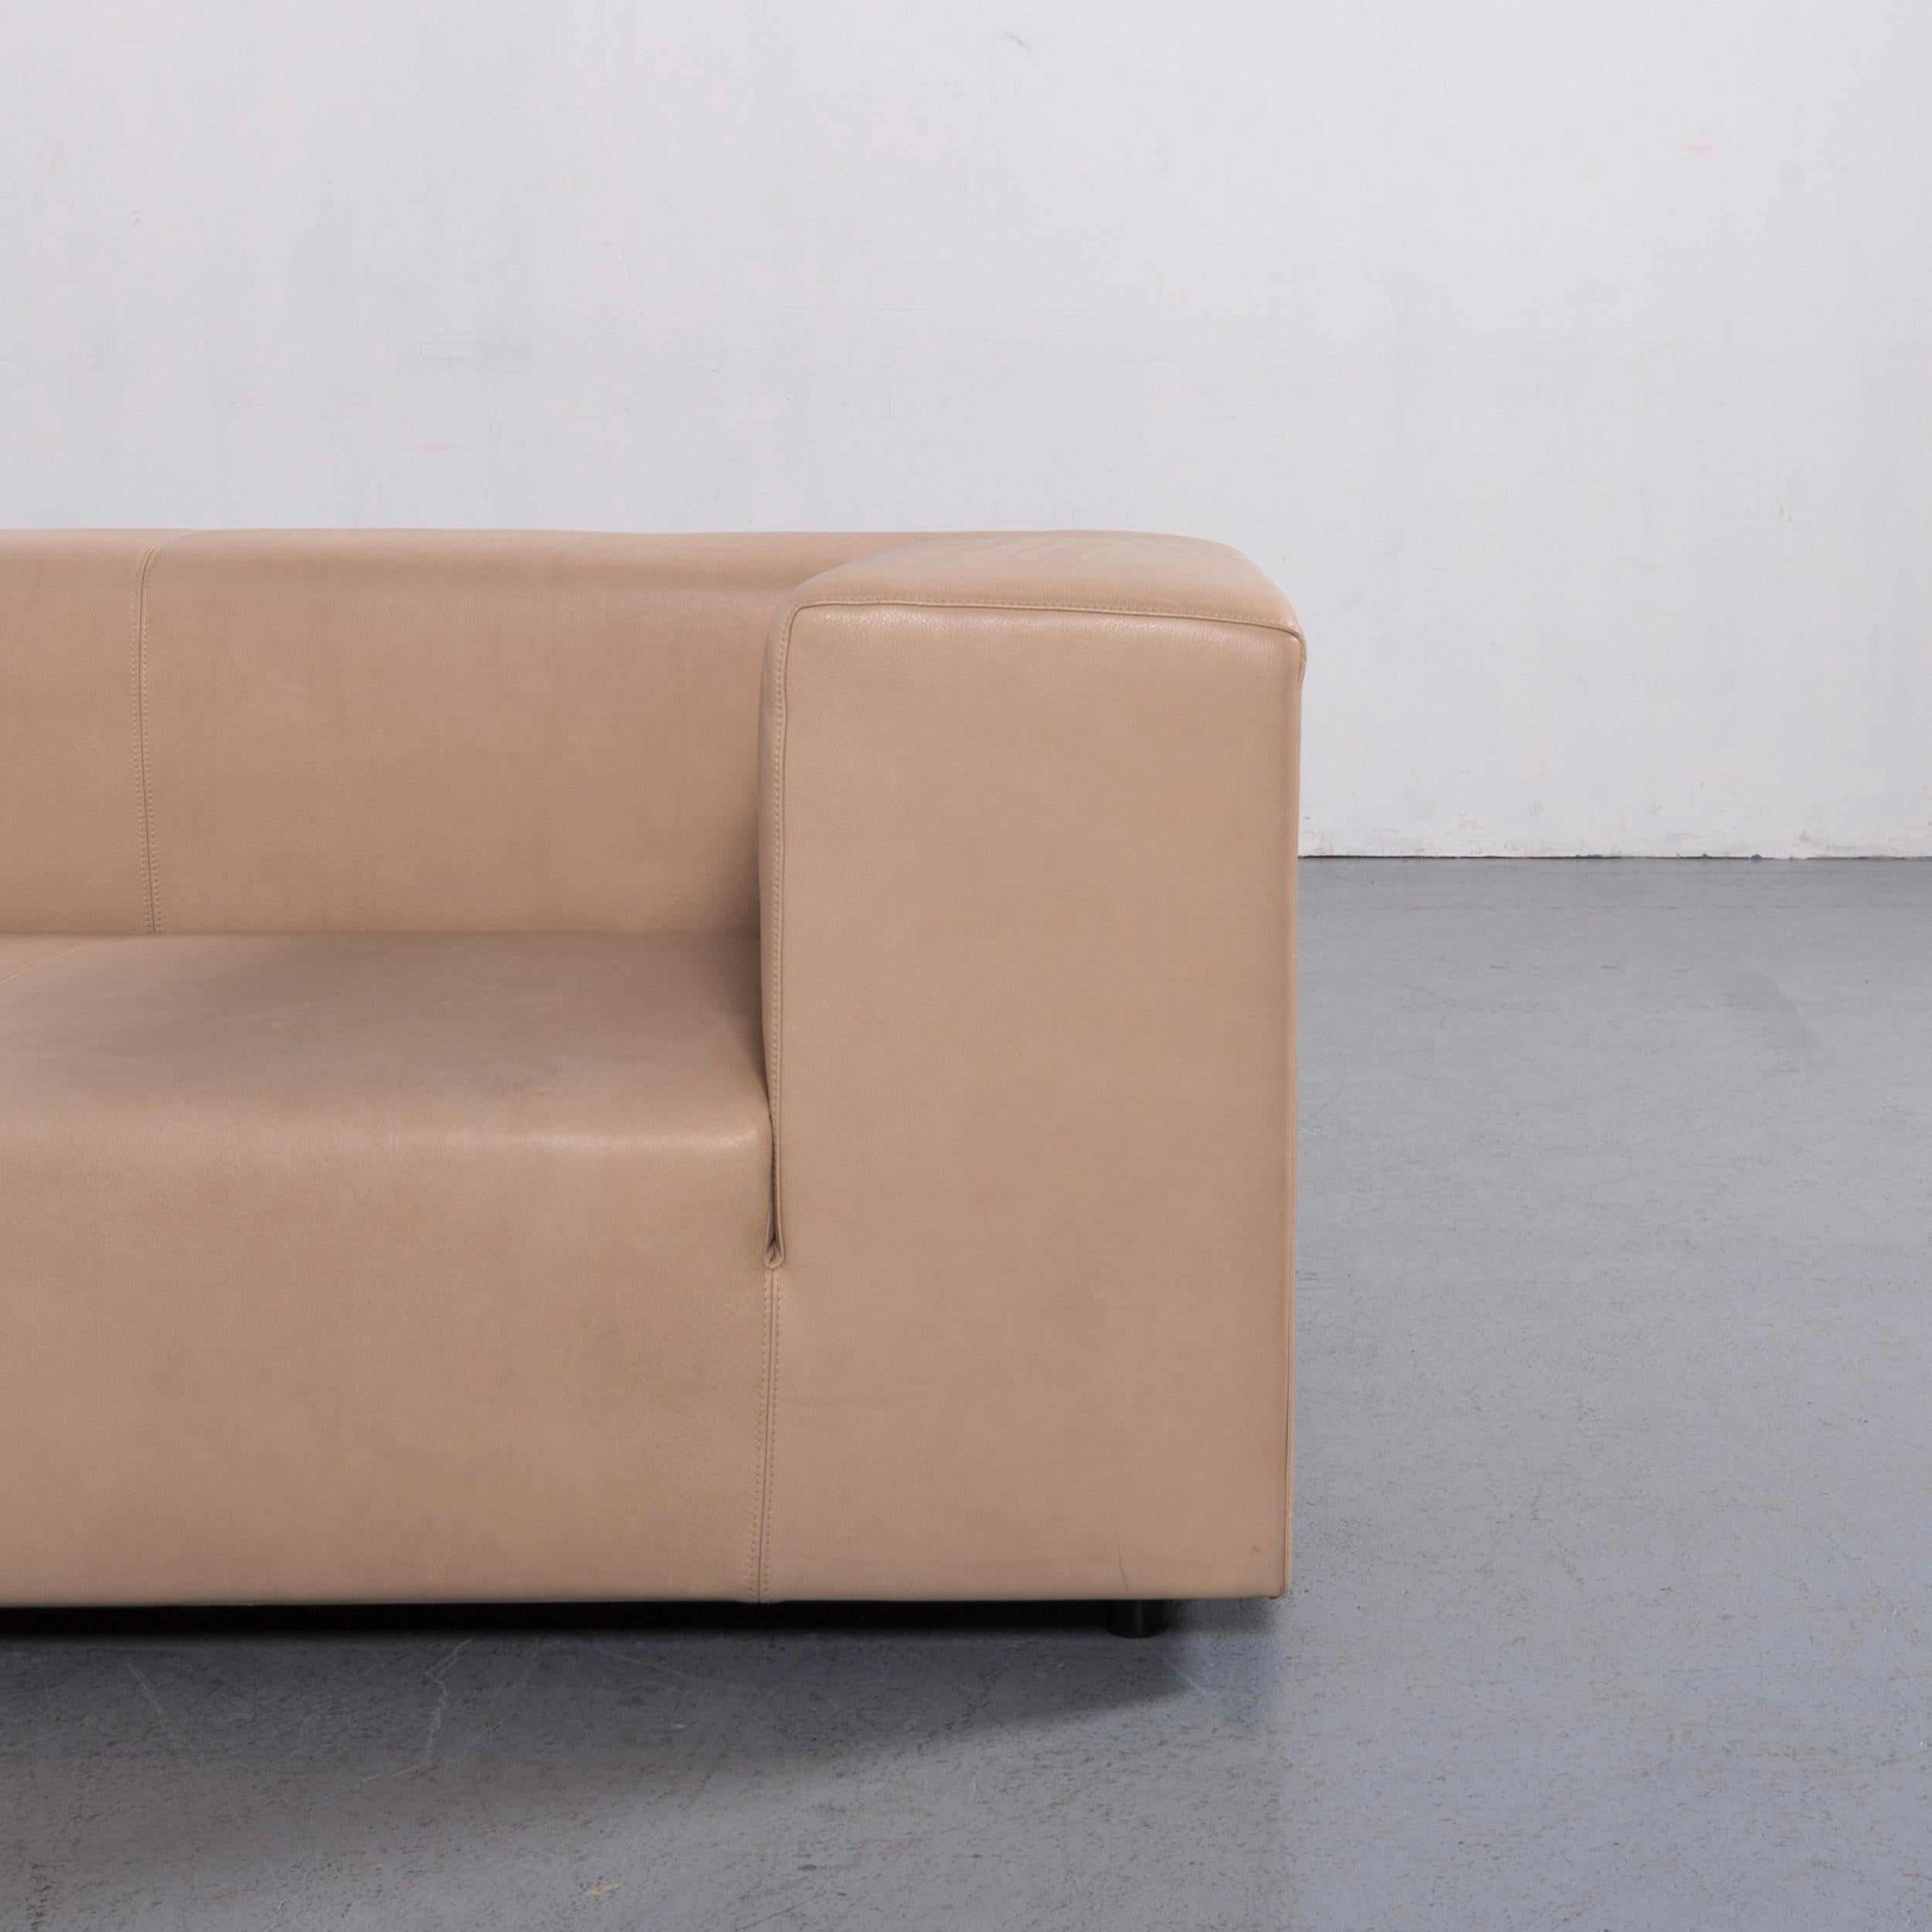 German Wittmann Designer Leather Sofa Brown Beige Two-Seat Couch Modern